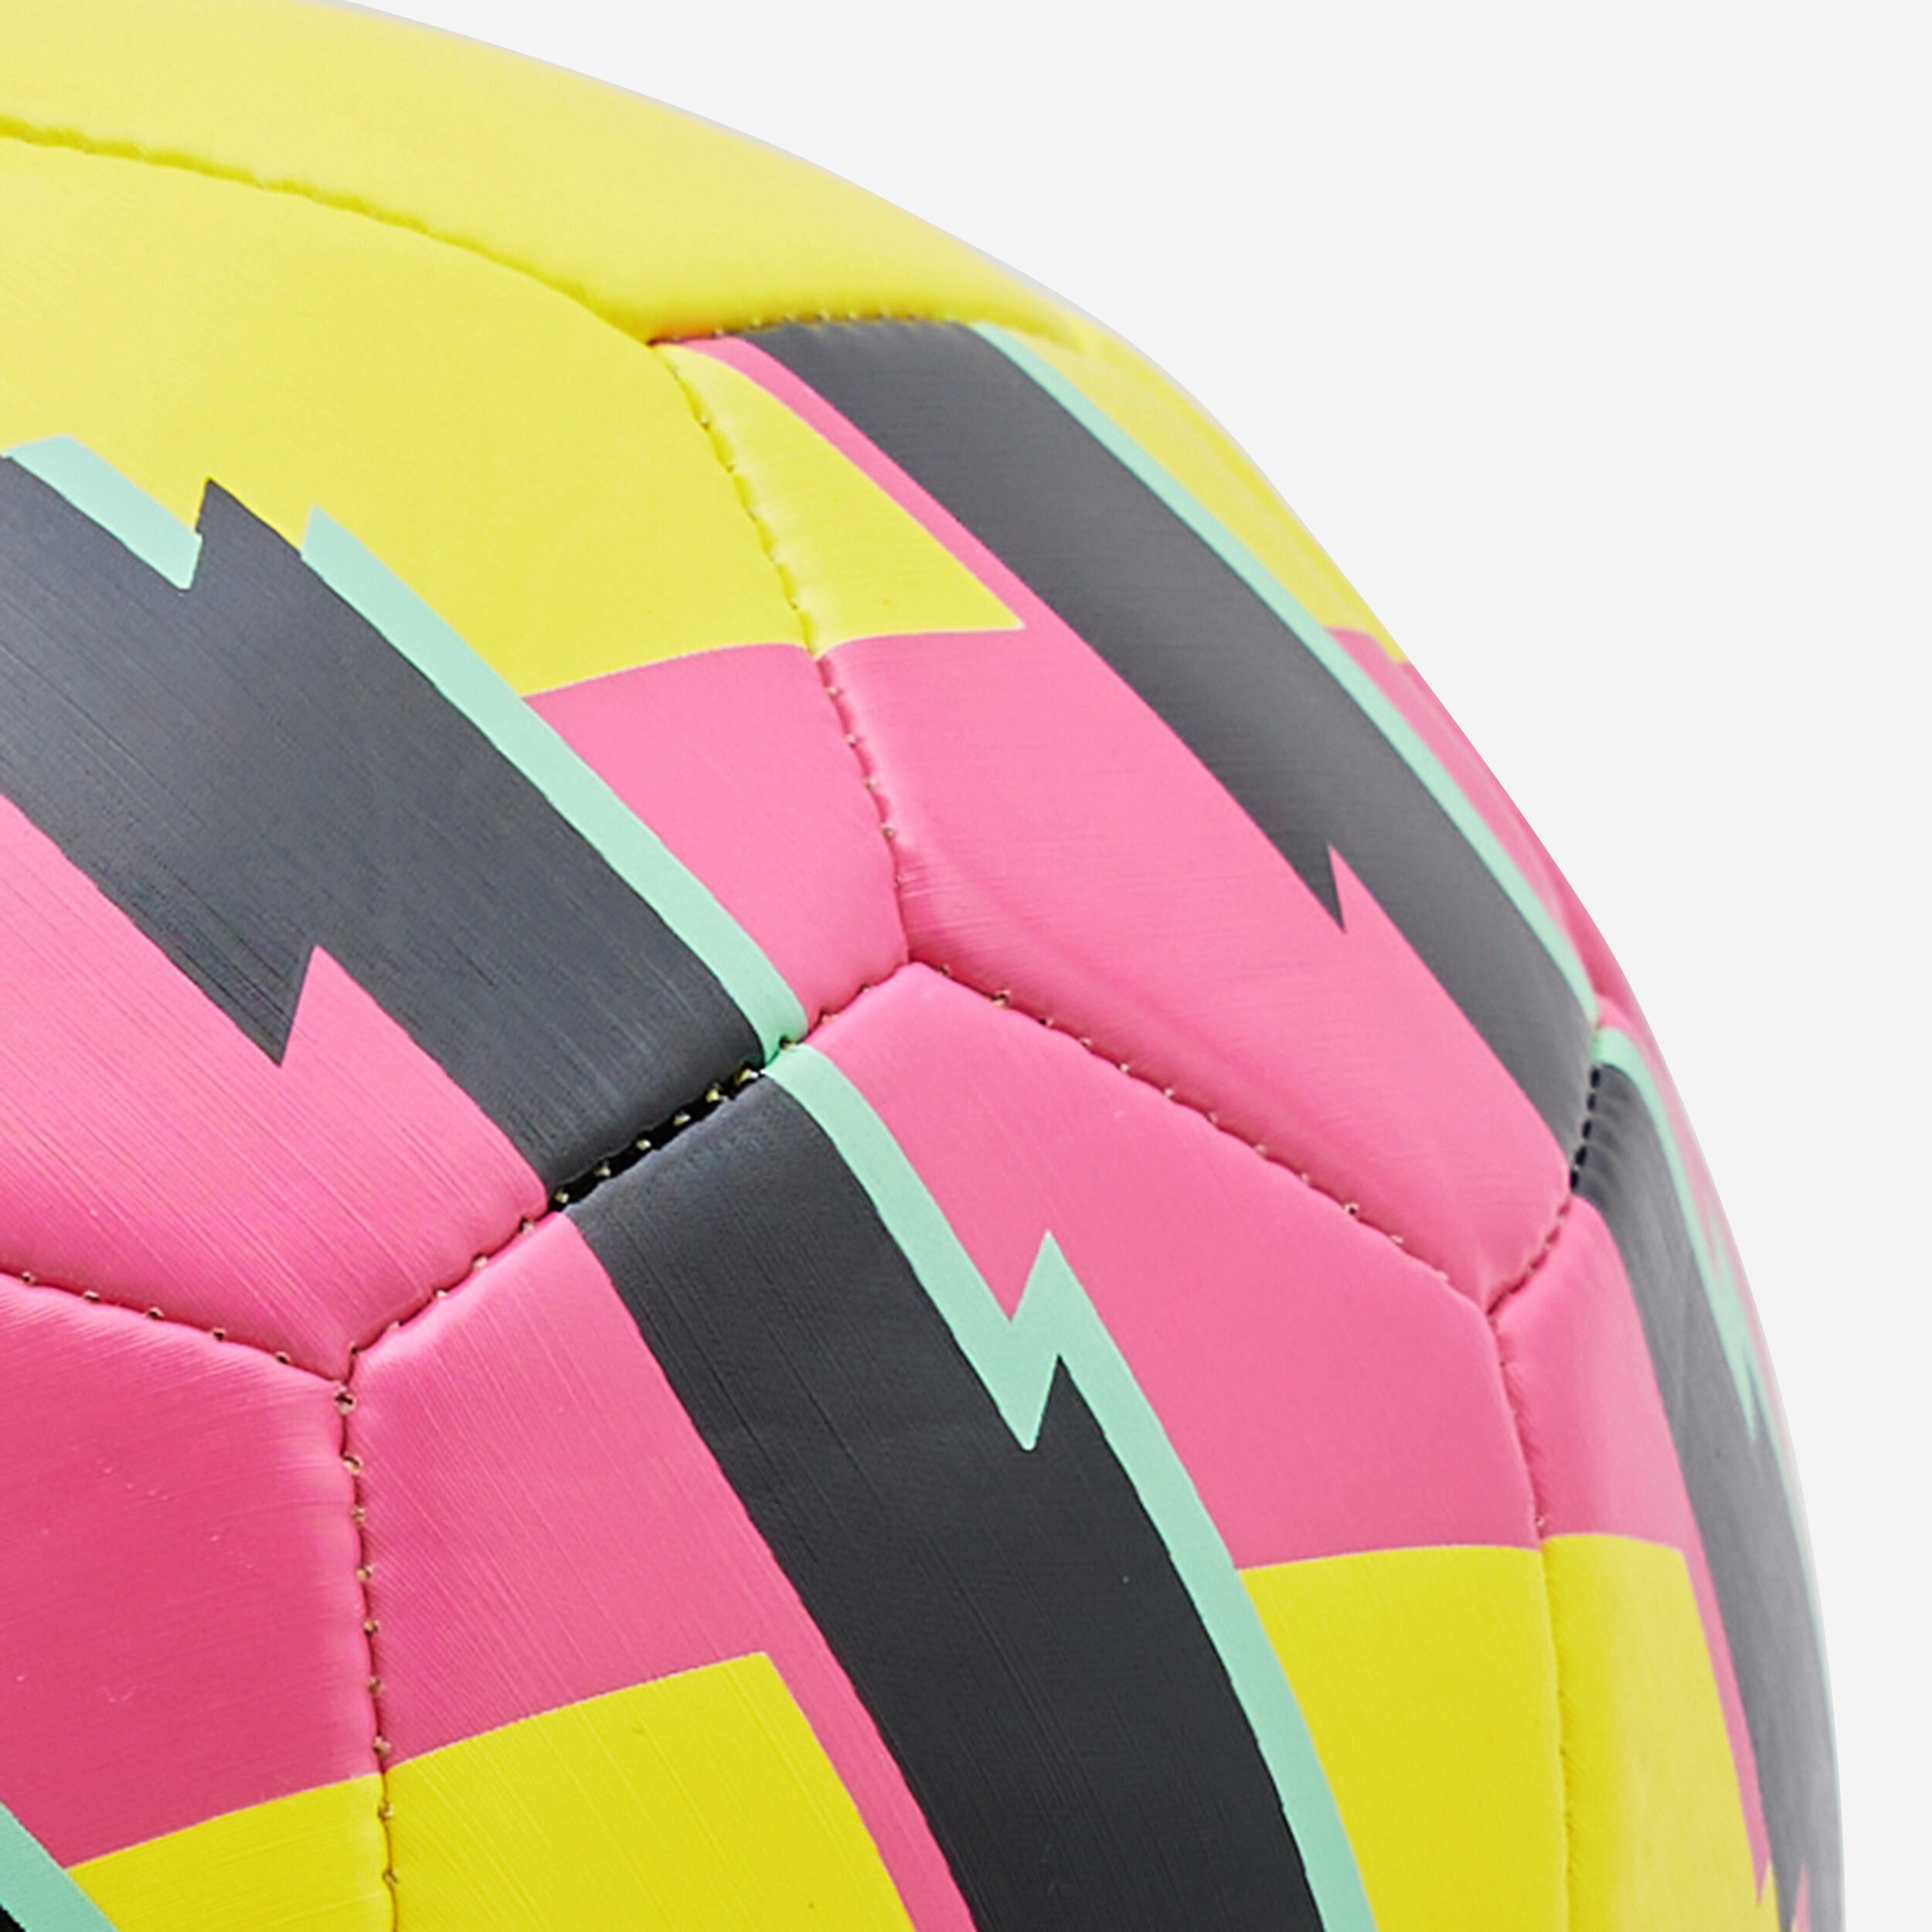 Mini Football Learning Ball Size 1 - Yellow/Pink 3/4